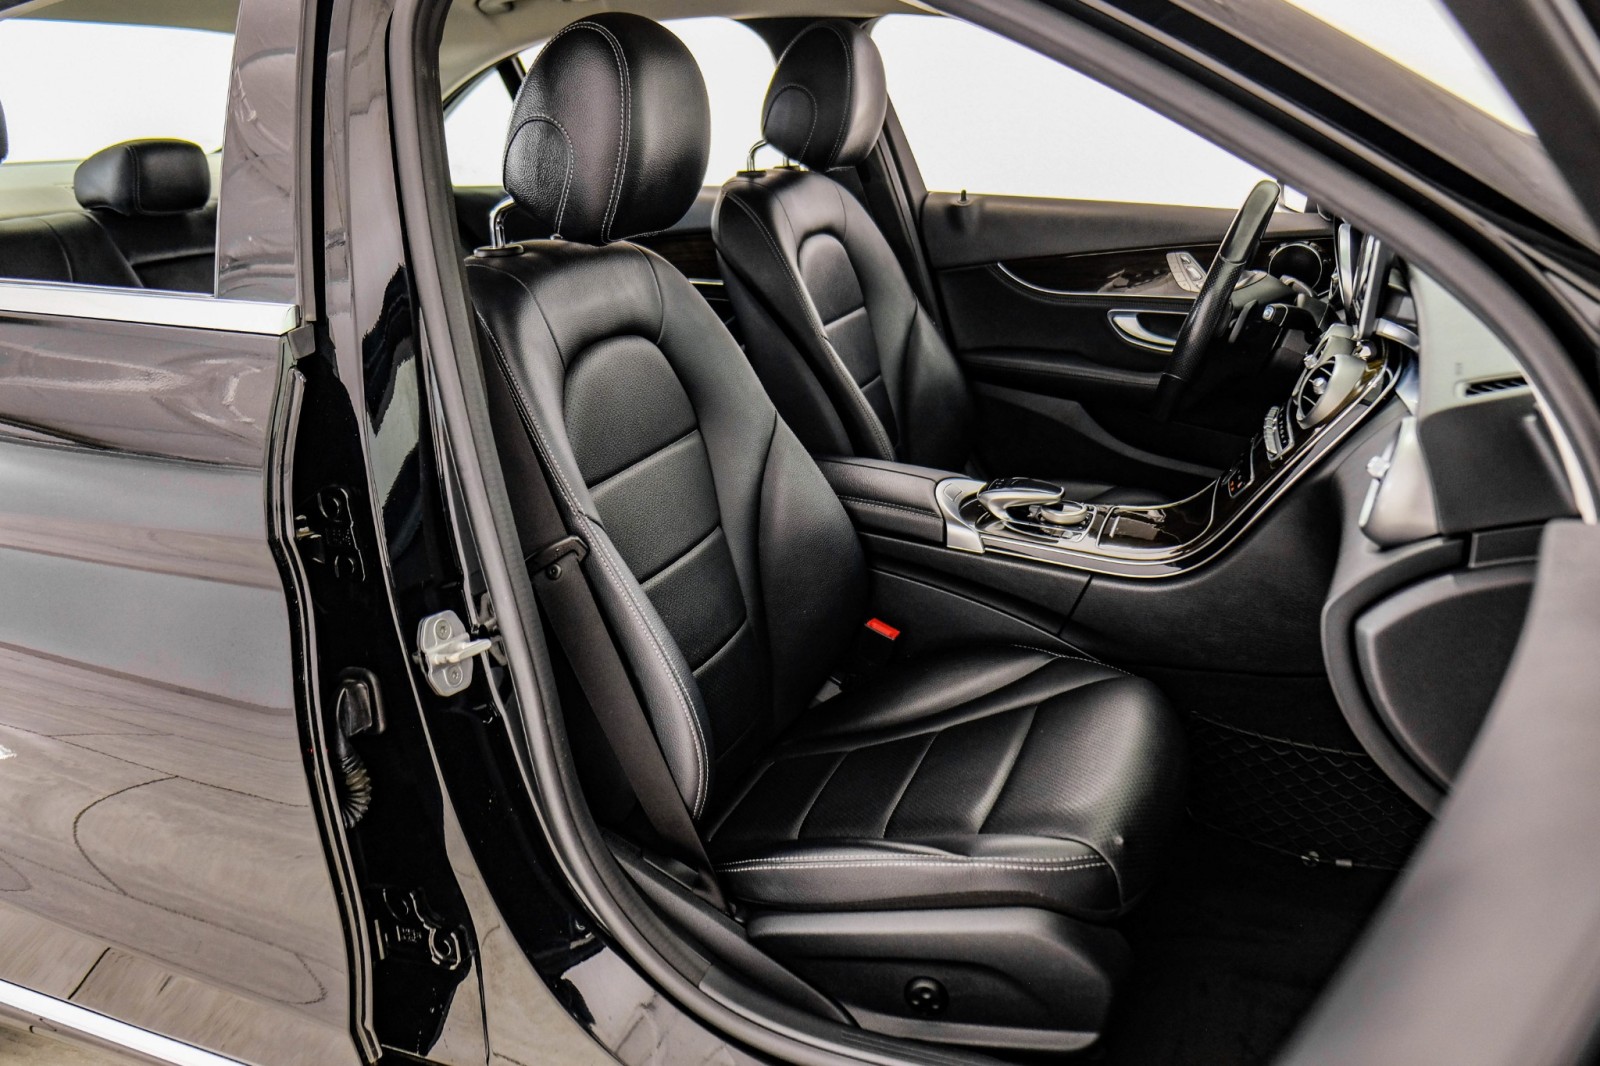 2015 Mercedes-Benz C300 SPORT BLIND SPOT ASSIST NAVIGATION LEATHER SEATS R 33